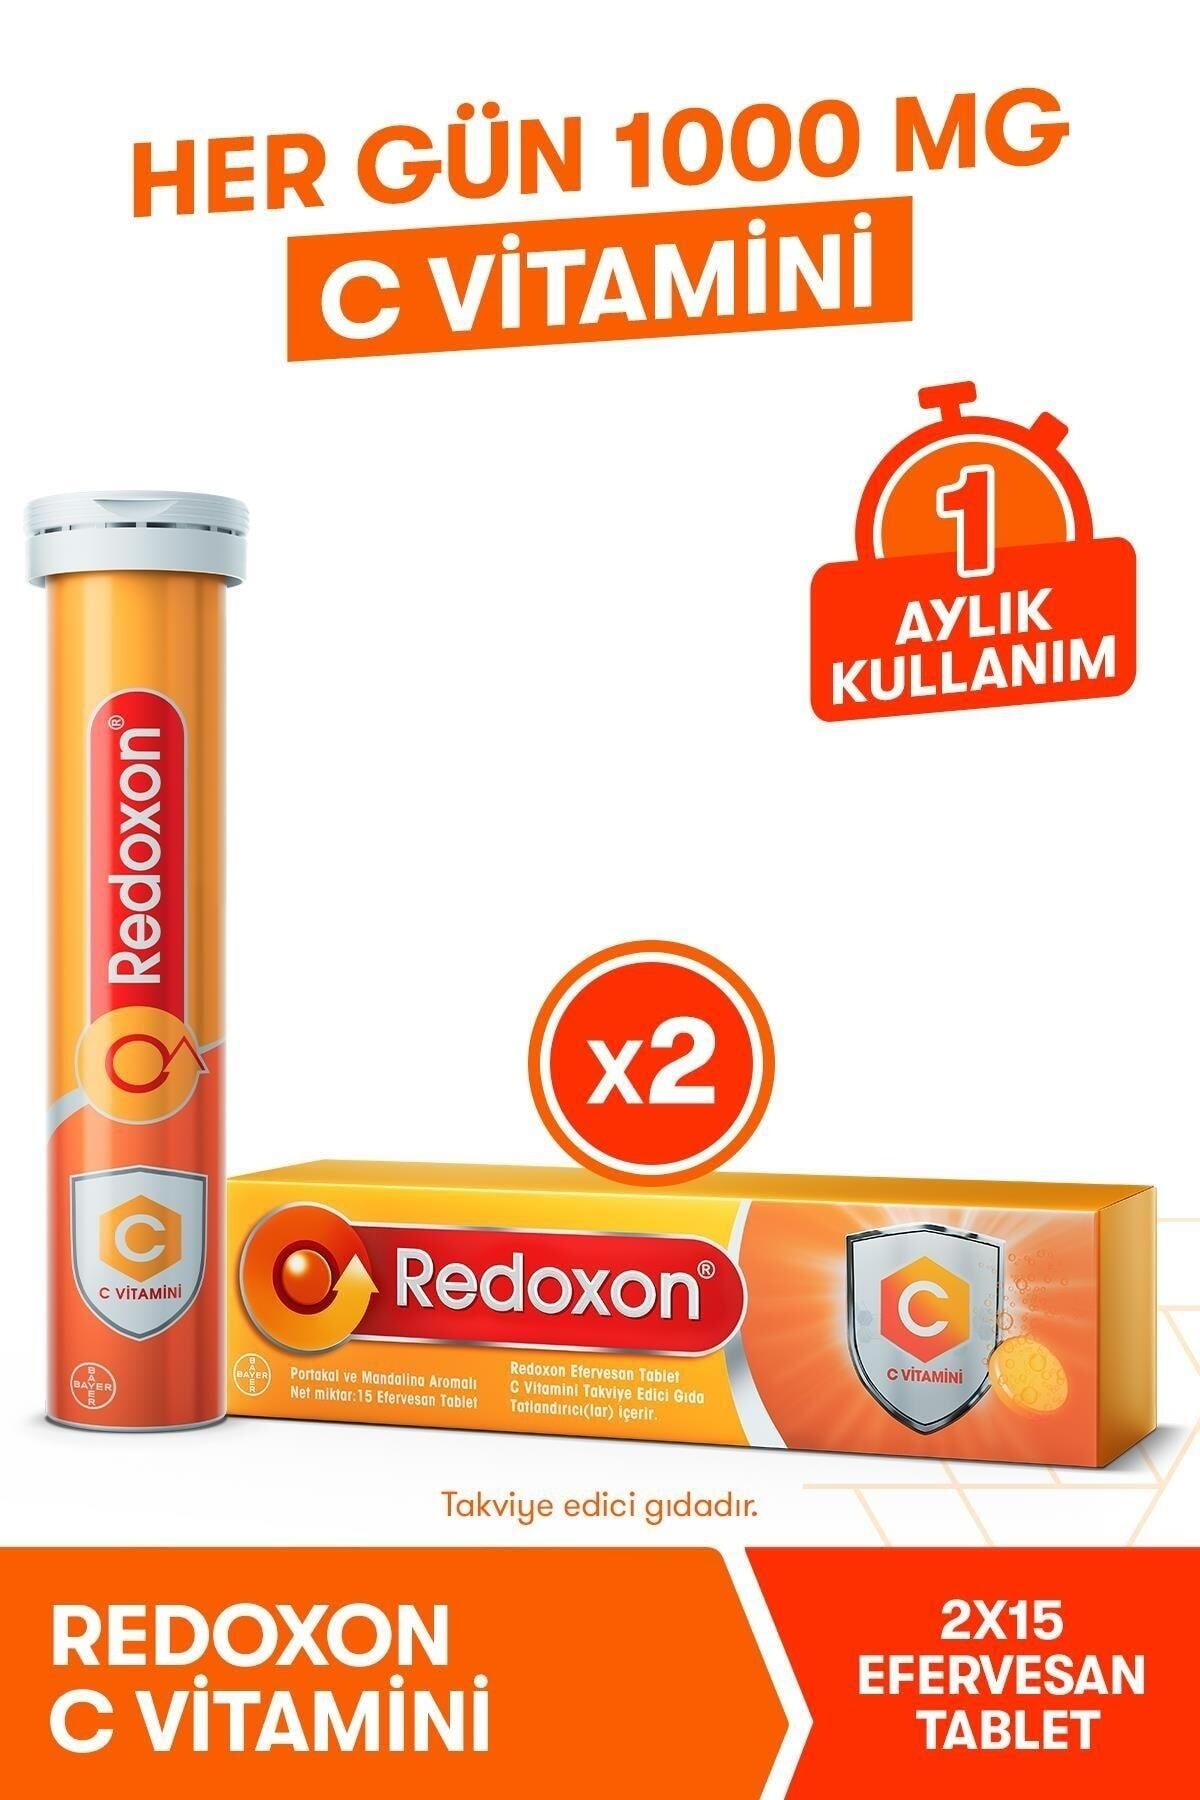 Redoxon C Vitamini 15 Efervesan Tablet 2li Paket I 1000 Mg C Vitamini Içeren Takviye Edici Gıda